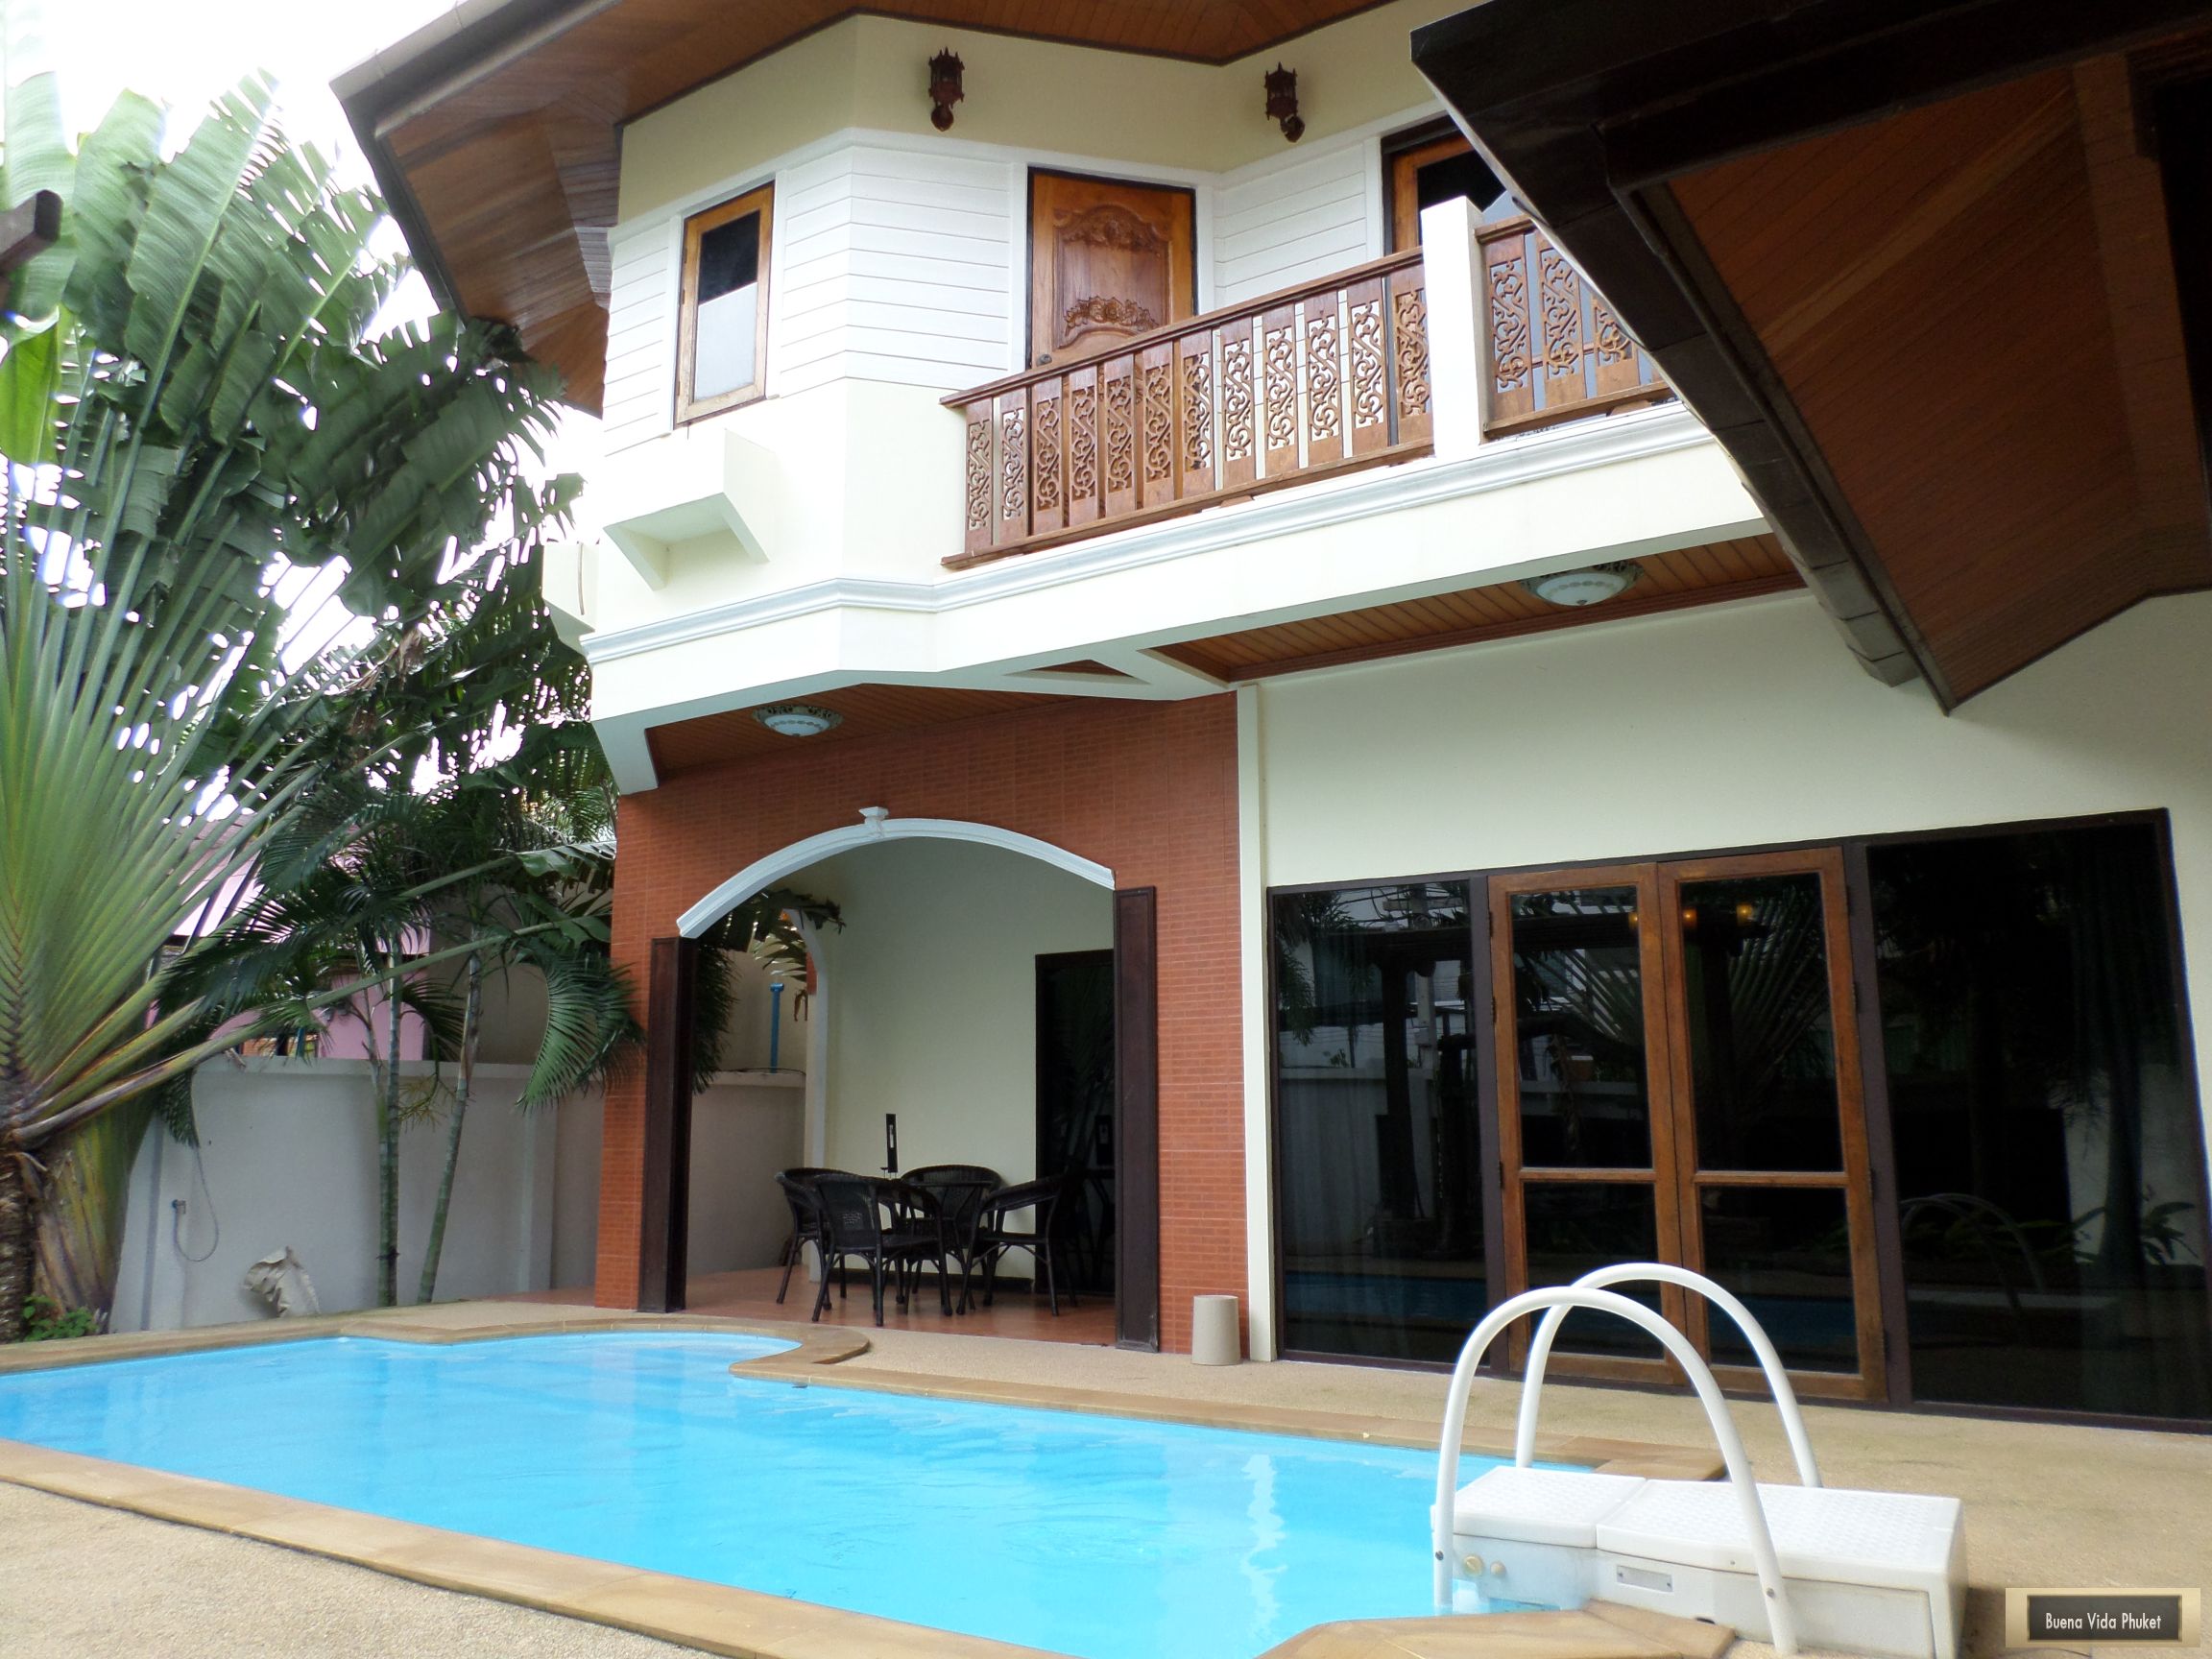 4 bedroom Nai Harn pool villa